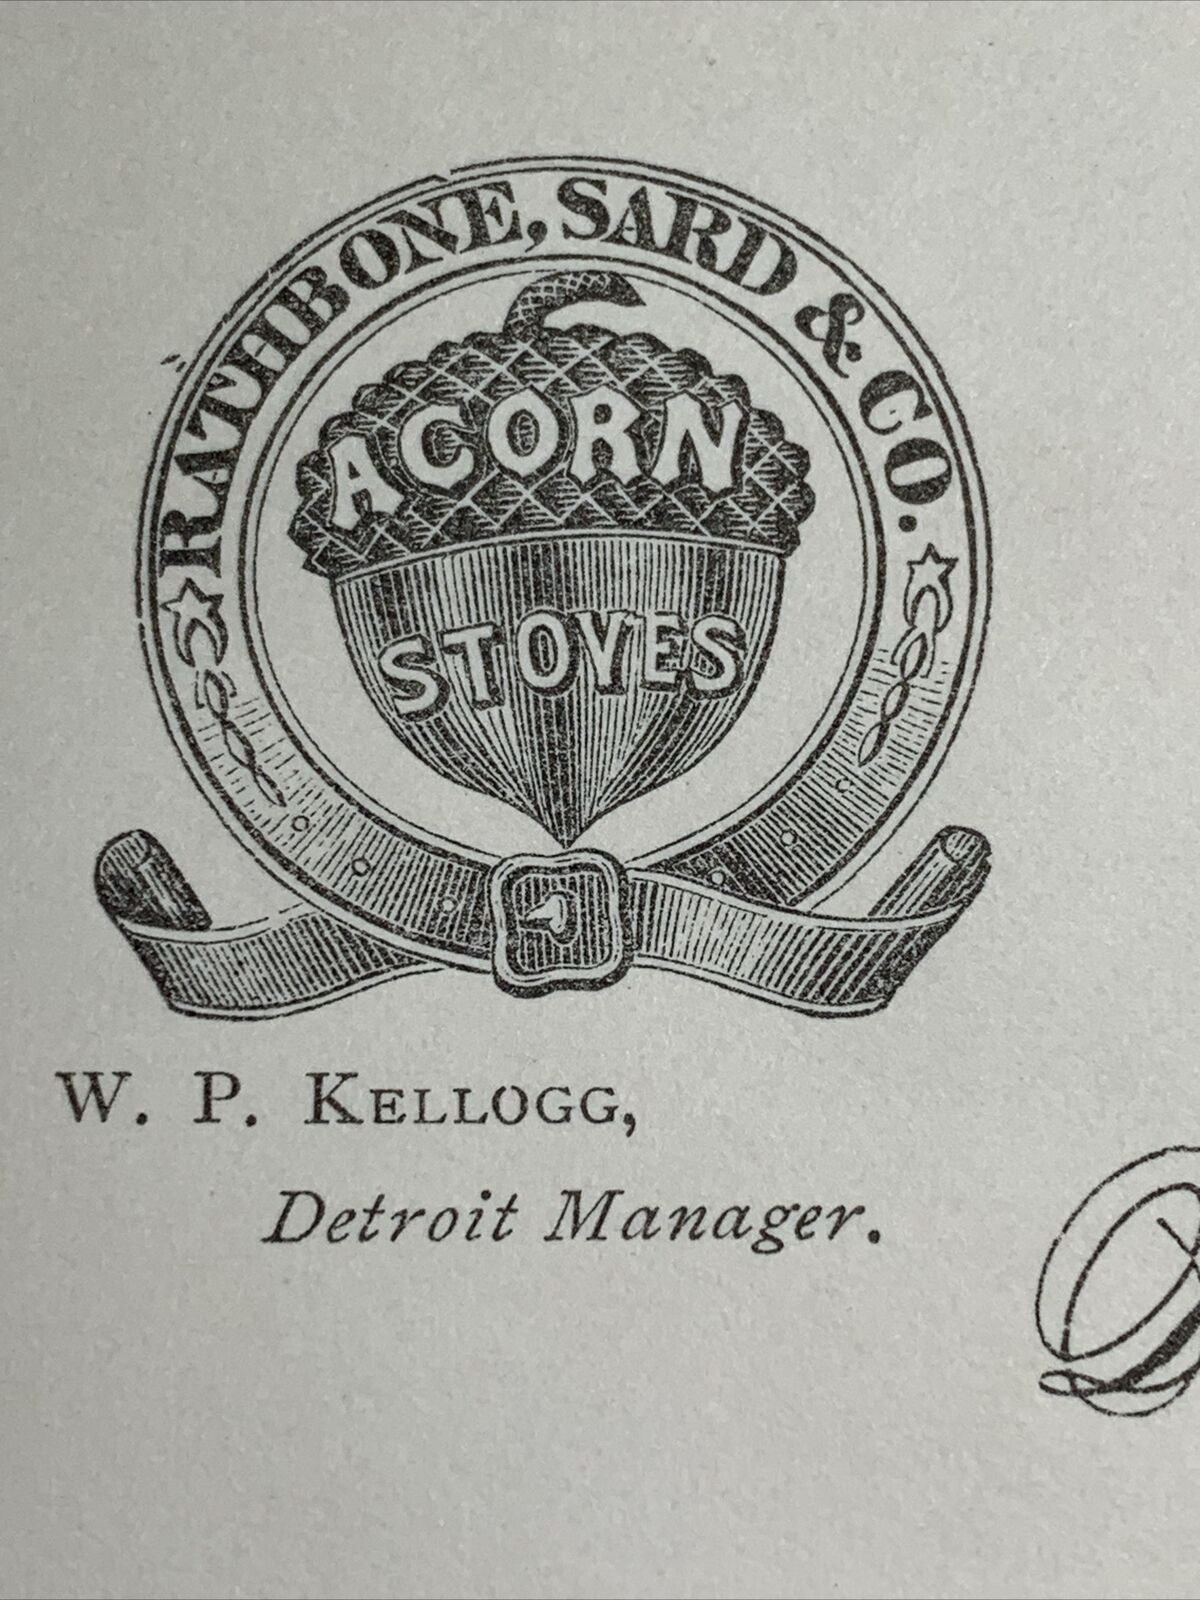 Detroit Michigan Billhead Acorn Stoves Rathbone Sard Stove Works 1882